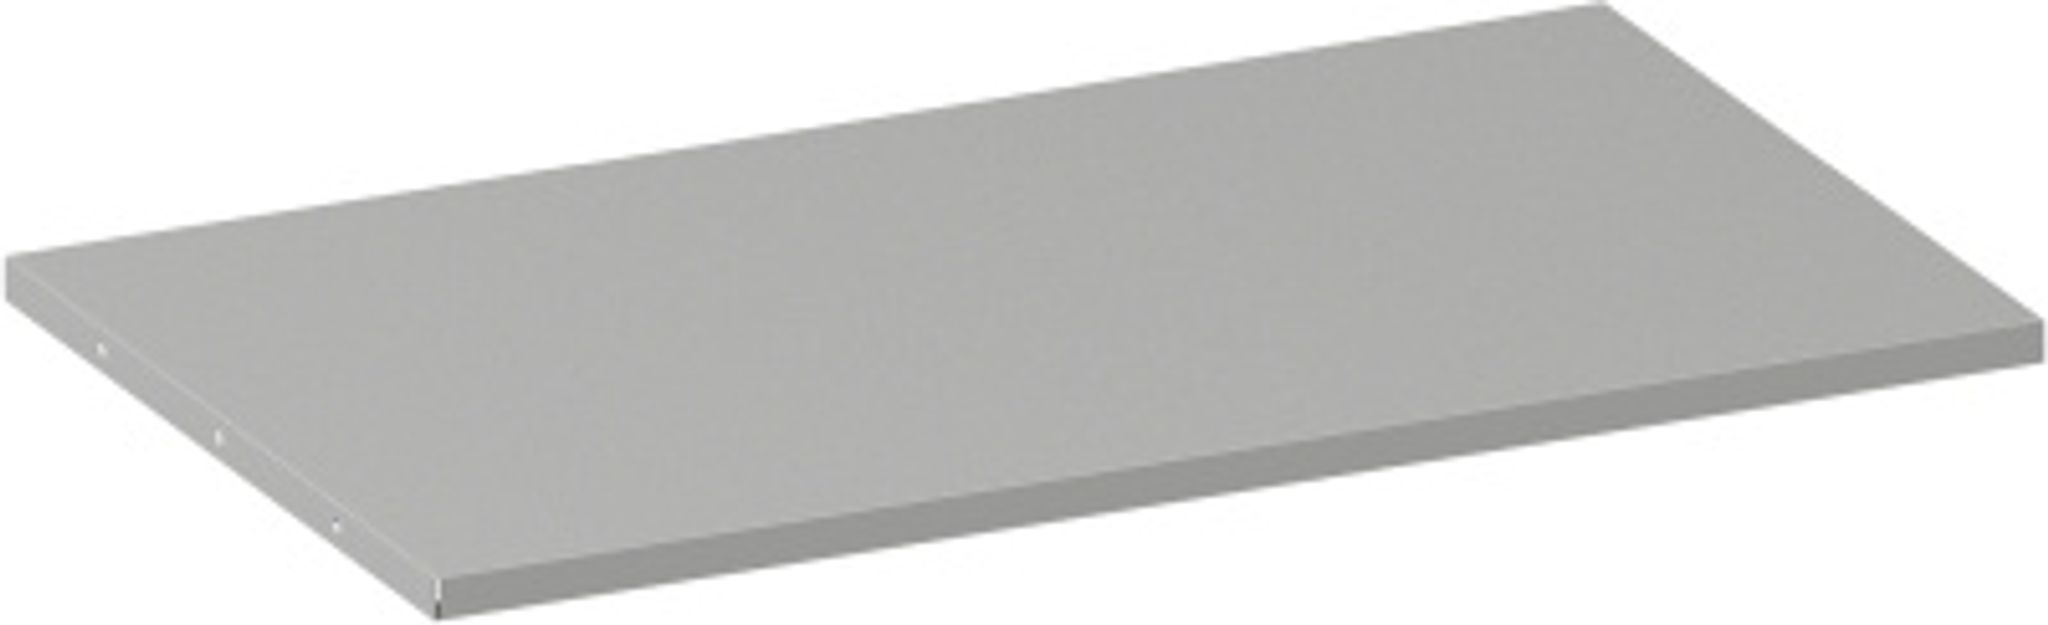 Dodatkowa półka do szafek metalowych, 950 x 600 mm, szara, 1 szt.